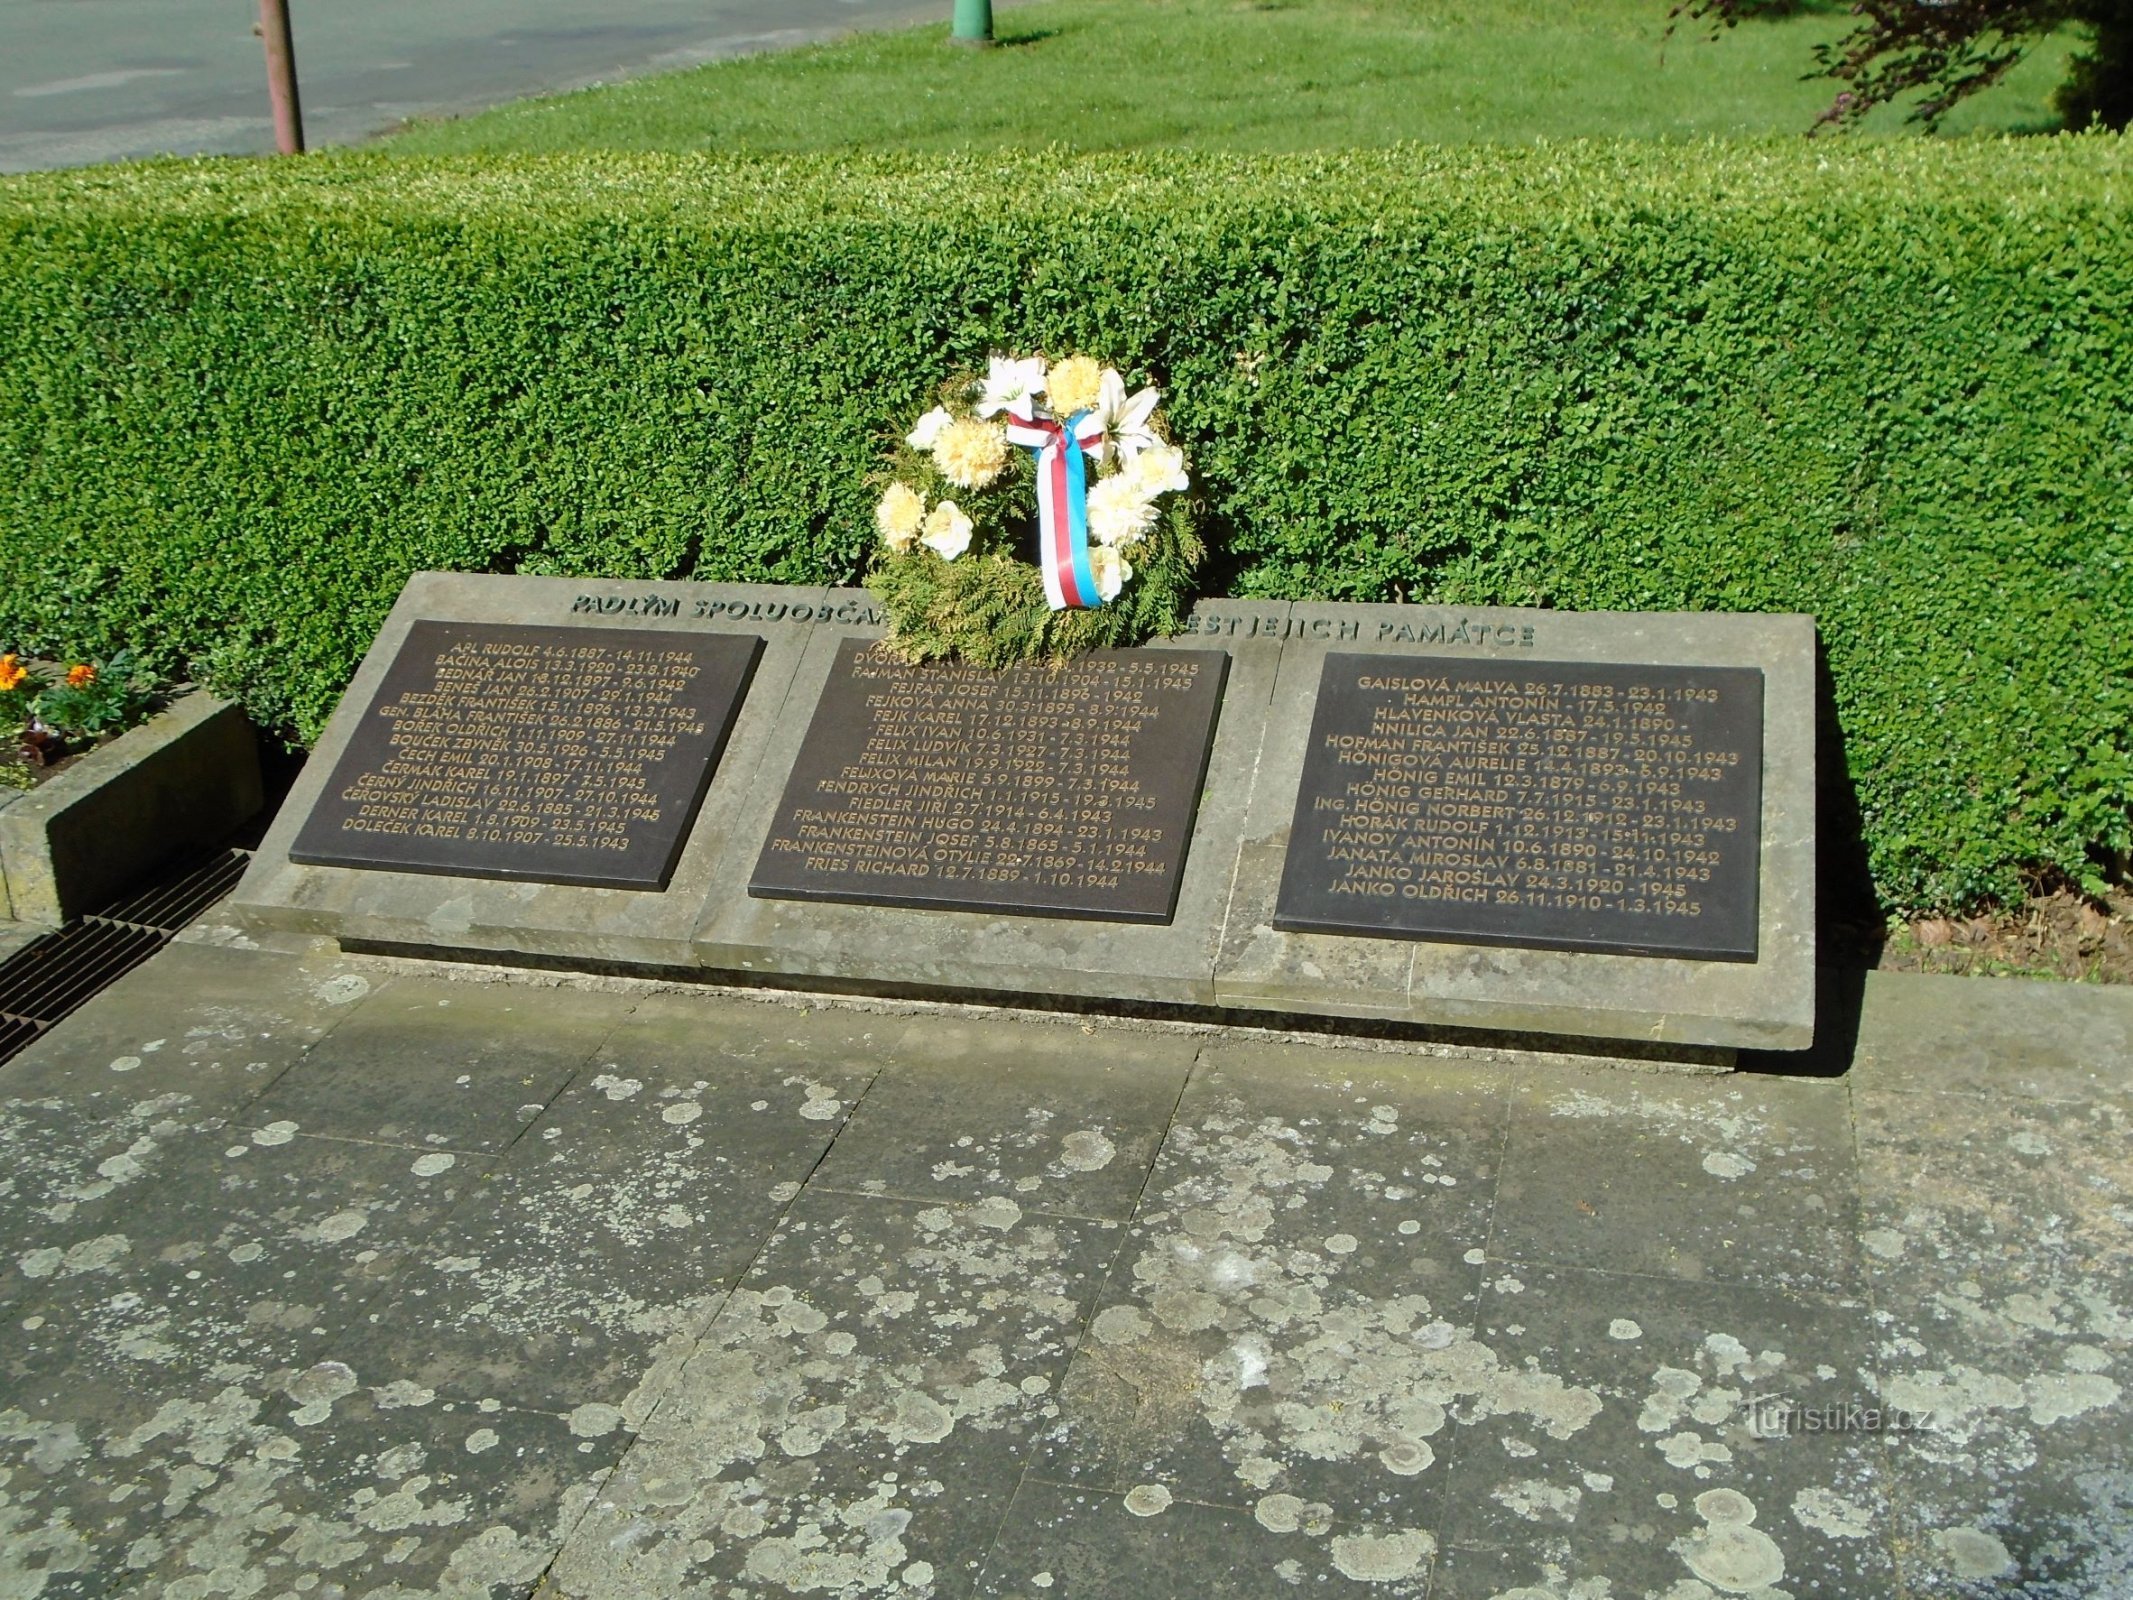 Memorial plaques at the liberation monument (Jaroměř, 13.5.2018/XNUMX/XNUMX)